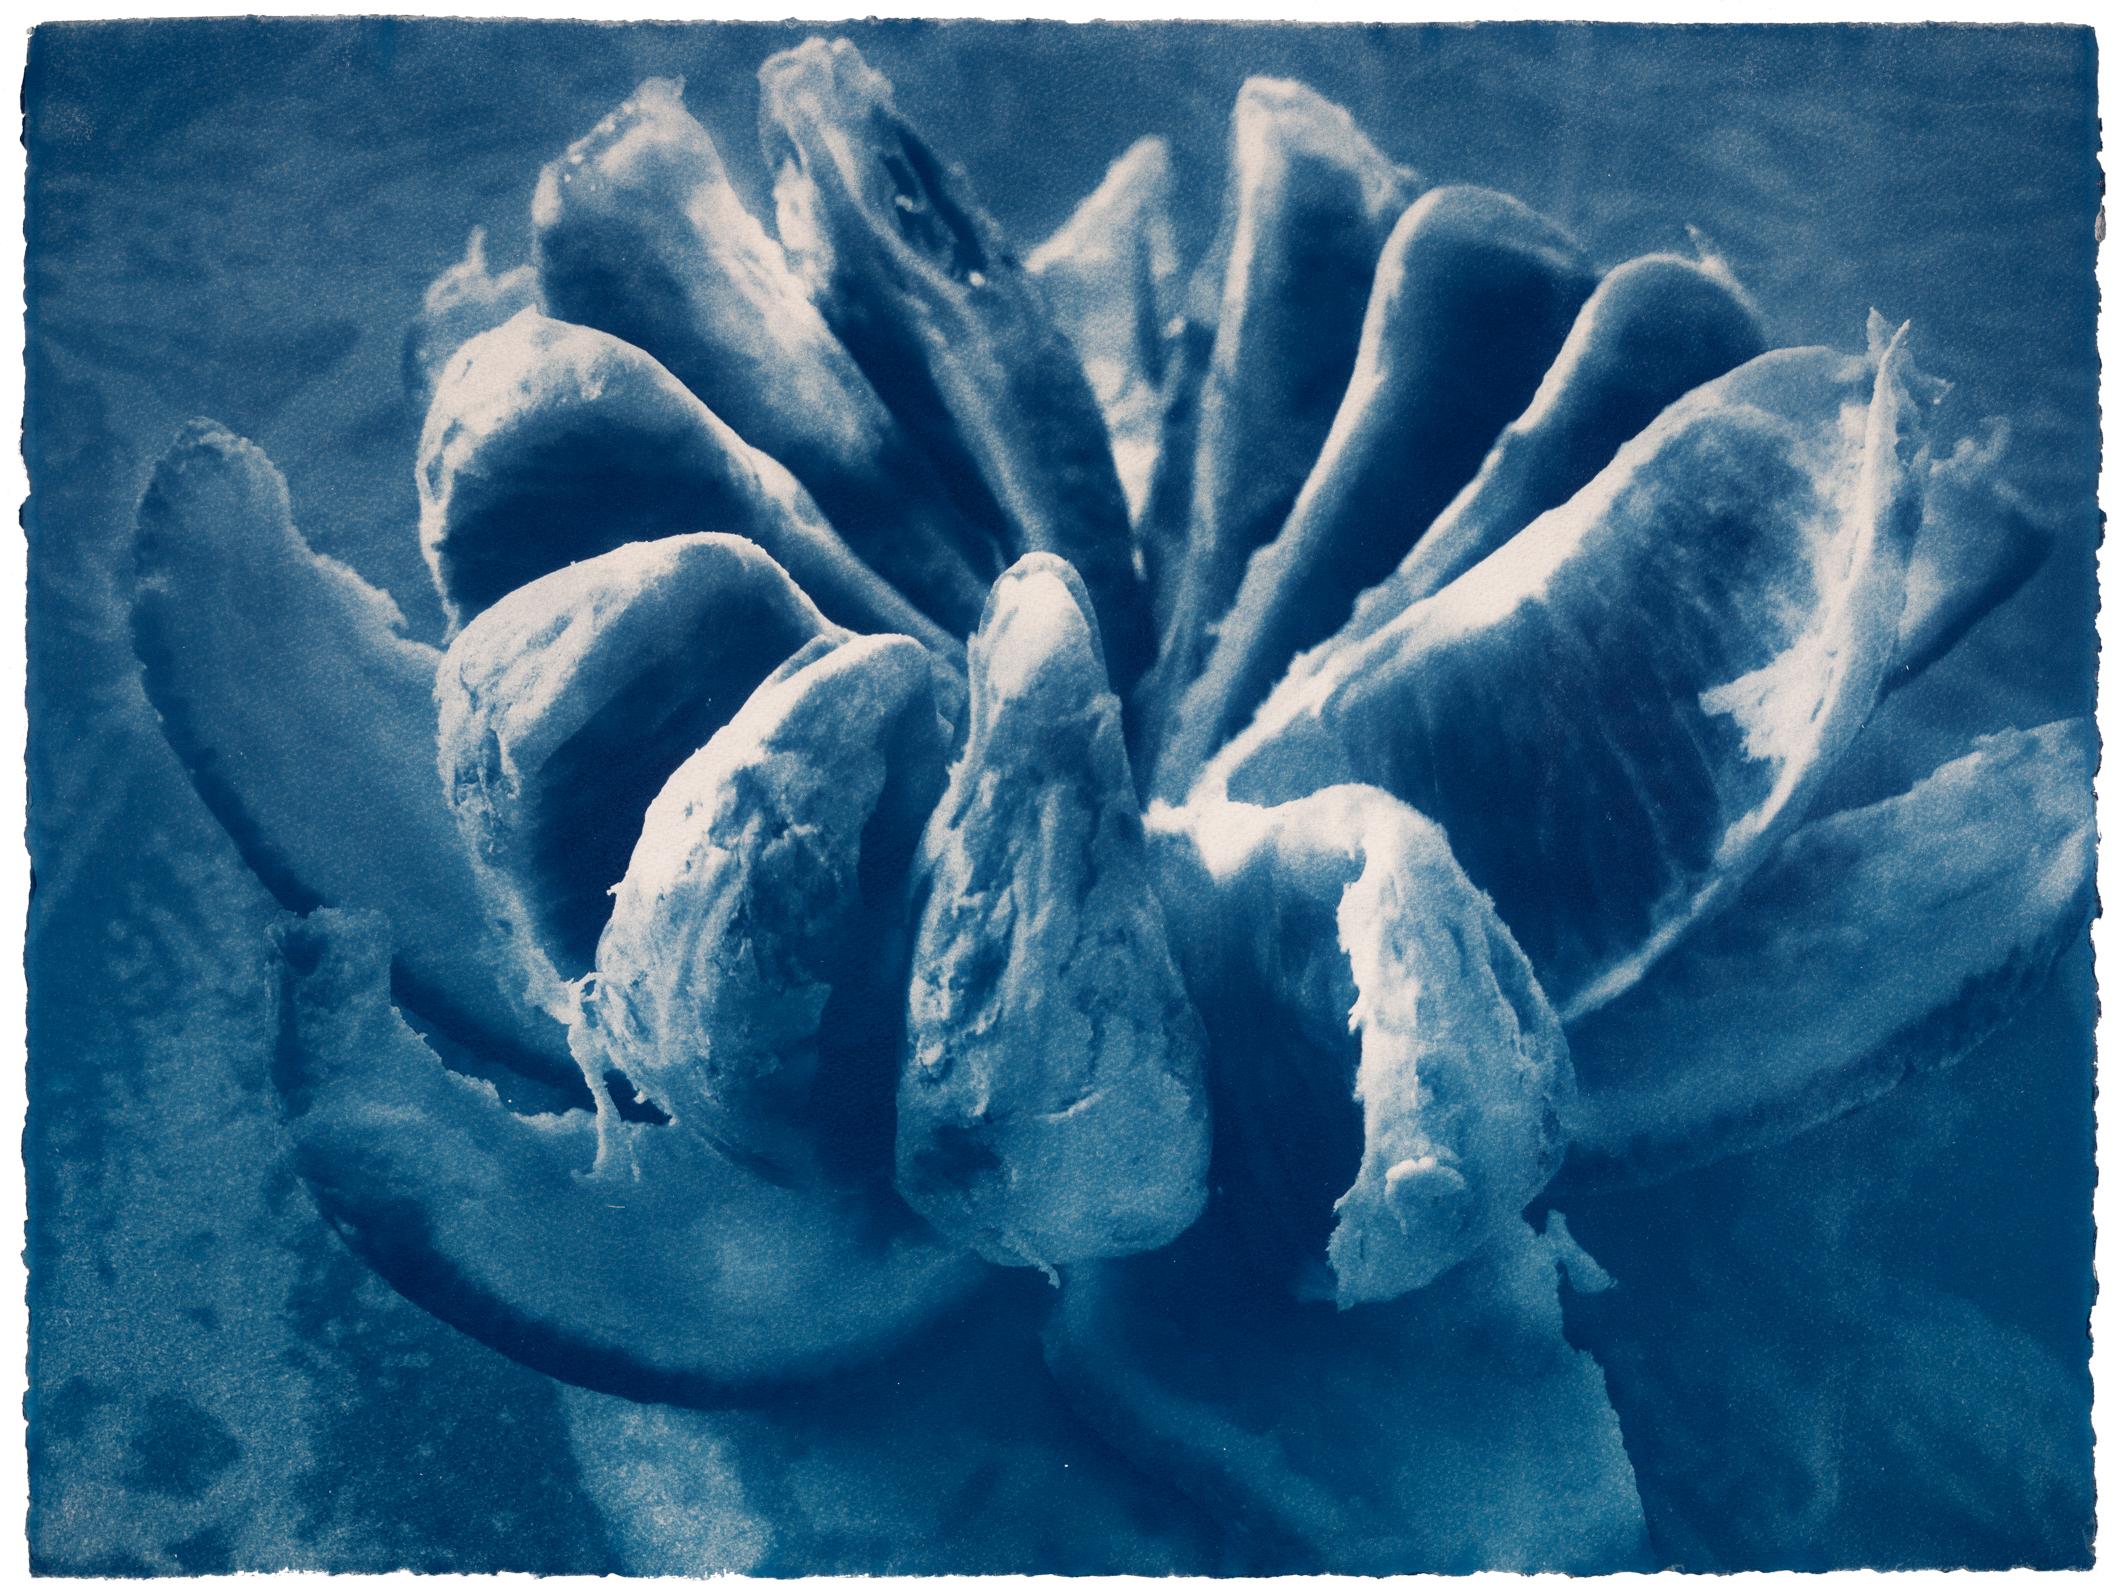 Daniela Keiser 9. Cyanocosmos, Blutorange e, 2020 Cyanotypie, 50 × 66 cm Papier: Velin d’Arches